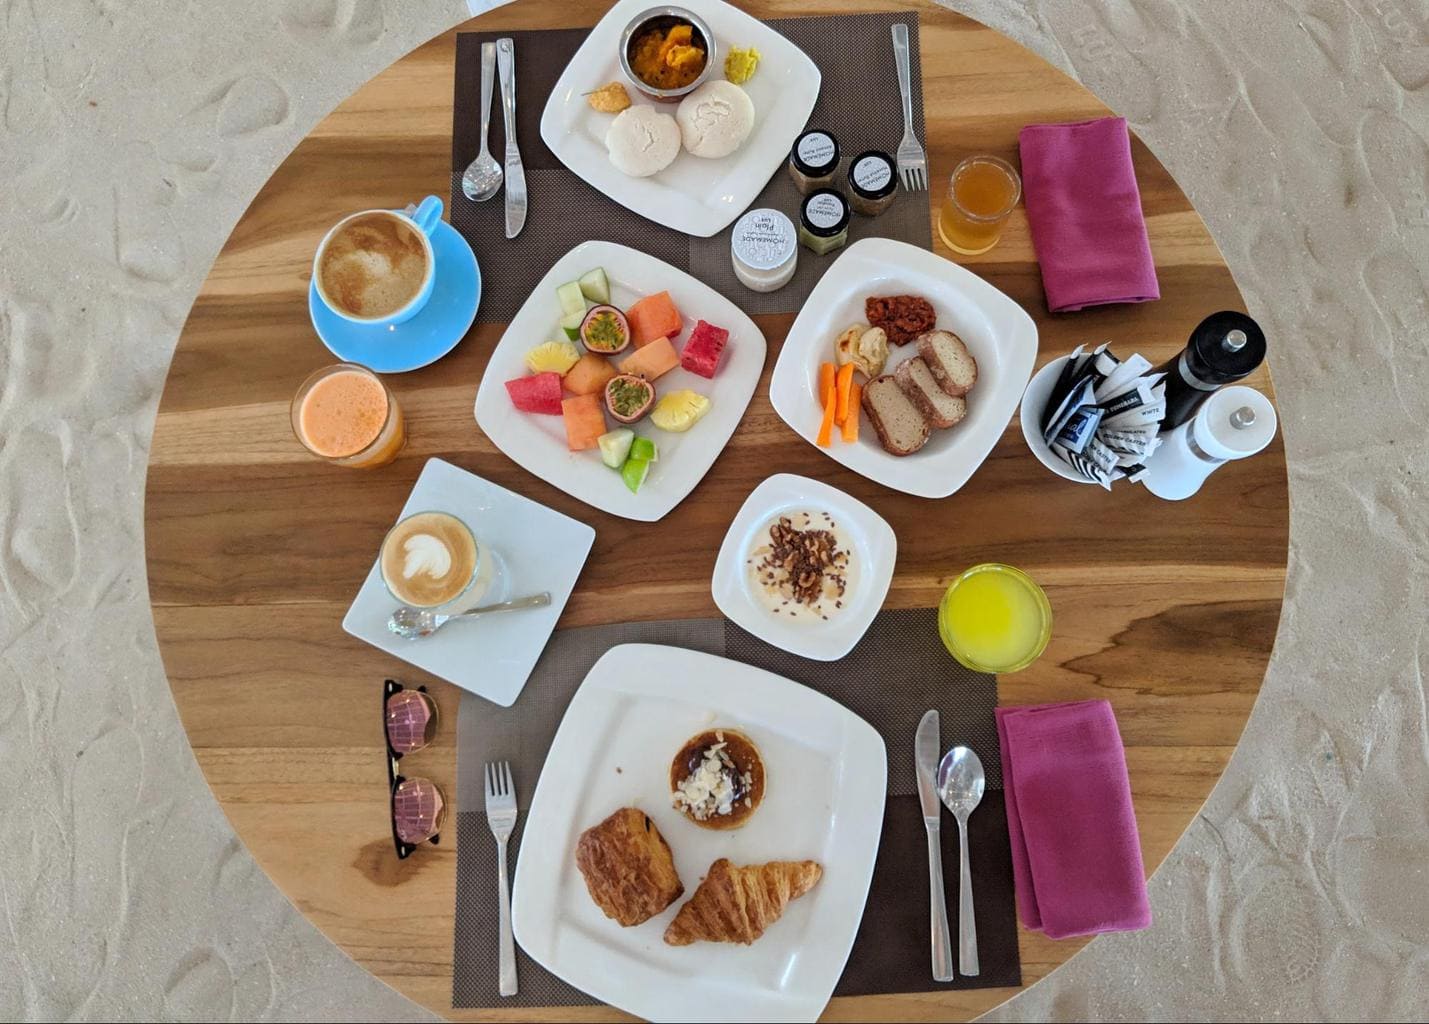 Our breakfast spread